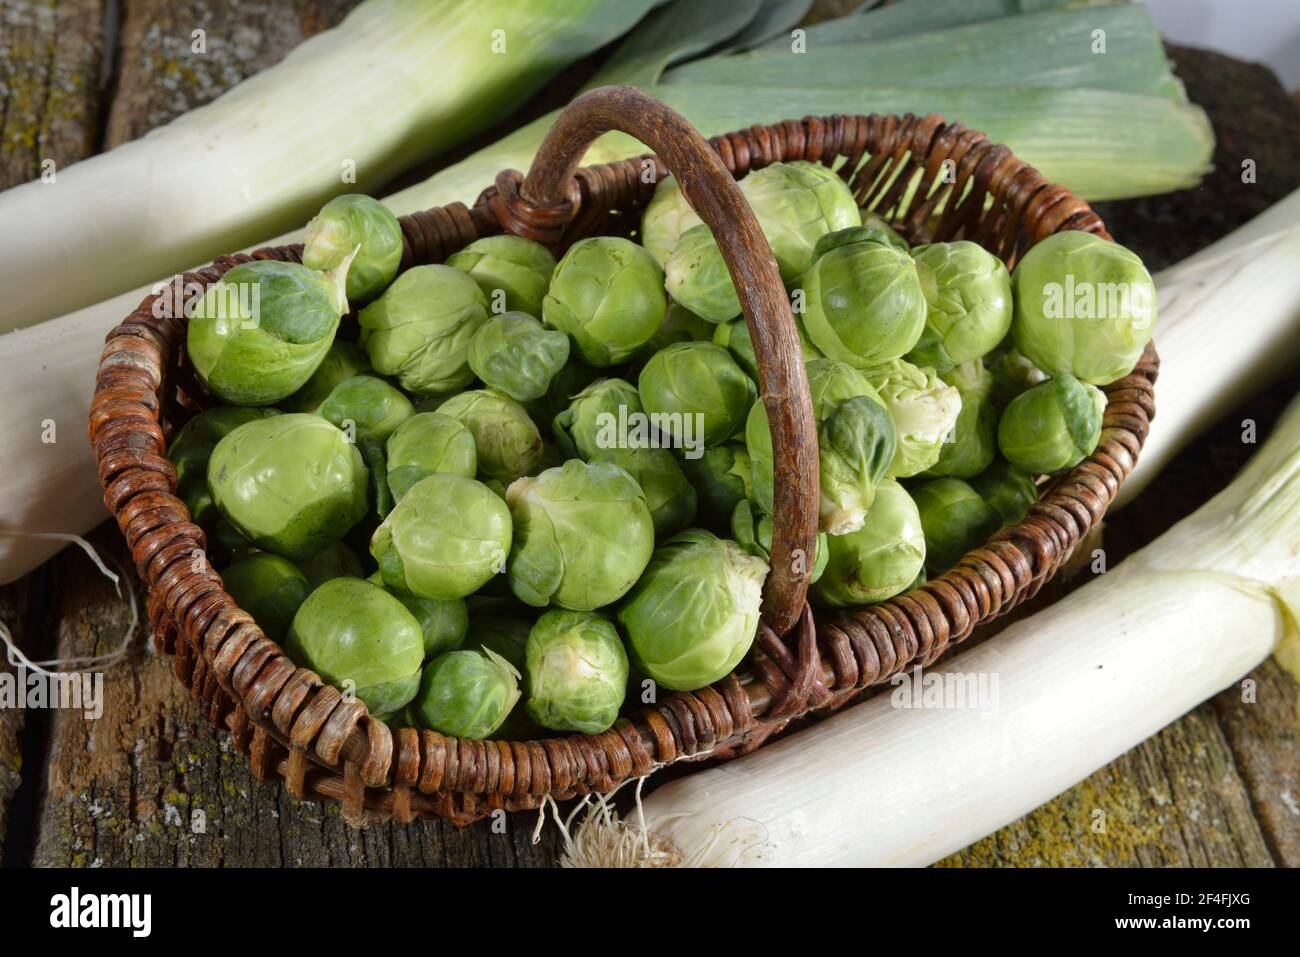 Brussels sprout (Brassica oleracea var. gemmifera), leek (Allium porrum) Stock Photo